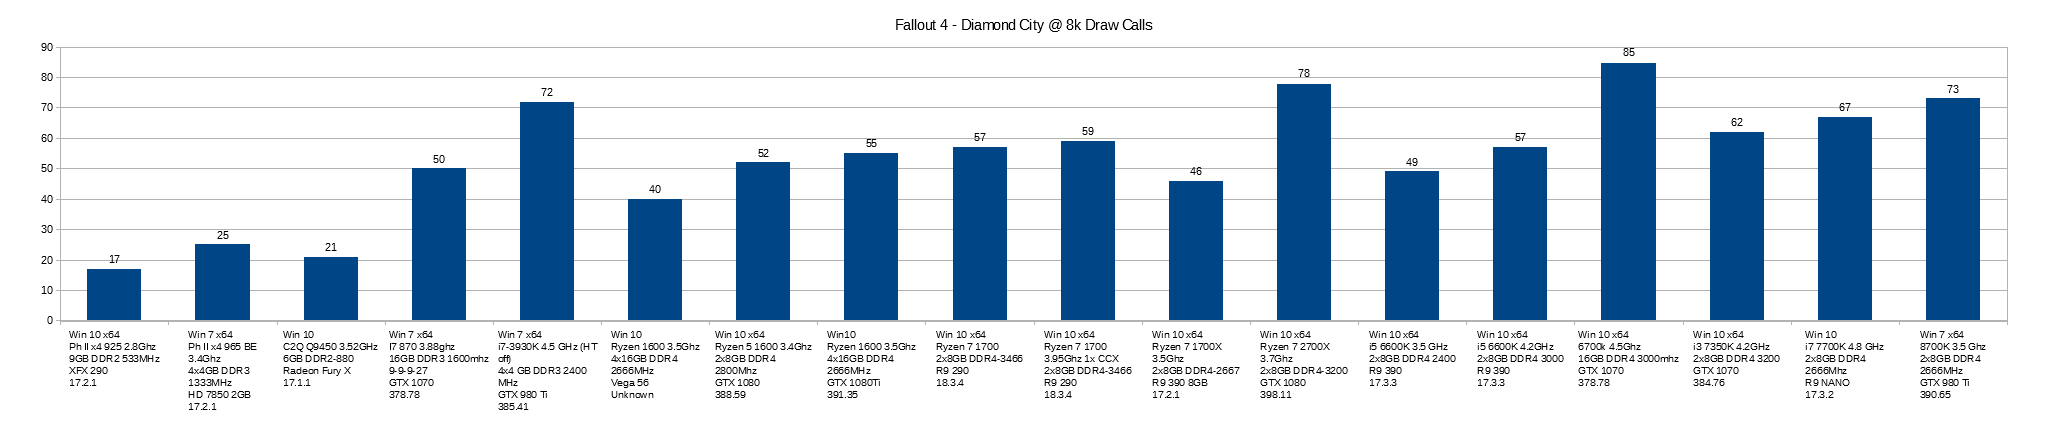 Fallout_4_Draw_Calls_-_Diamond_City.png